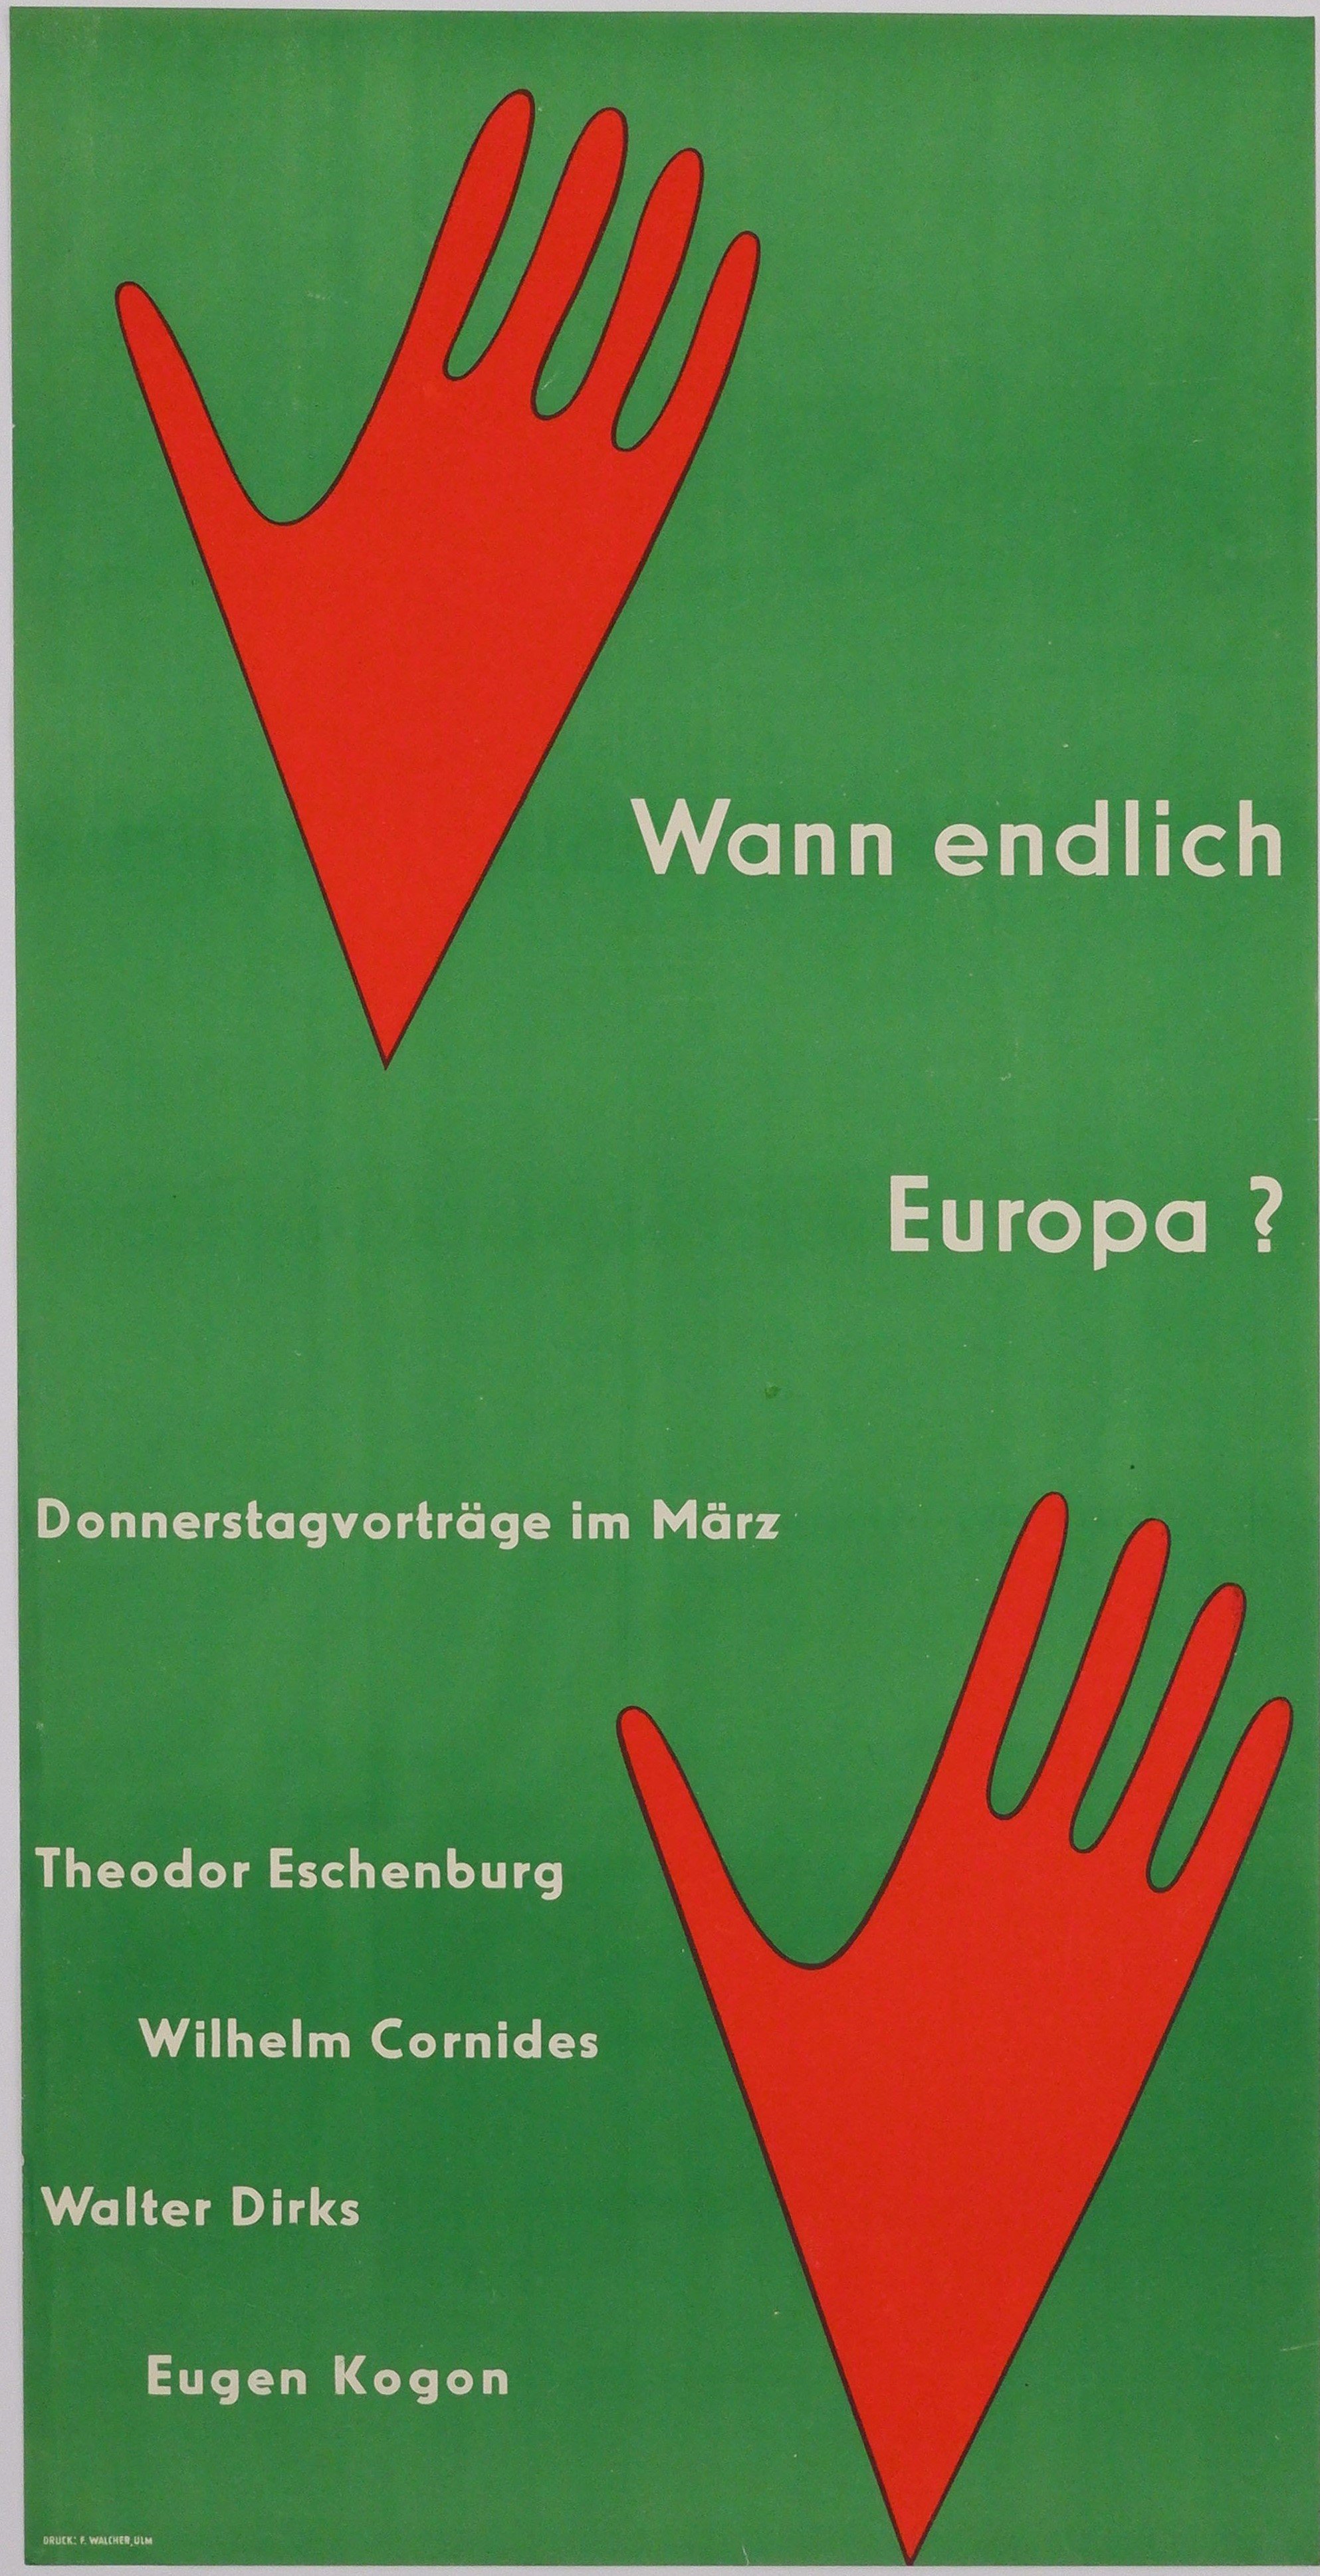 Wann endlich Europa? (HfG-Archiv/Museum Ulm, Florian Aicher RR-P)